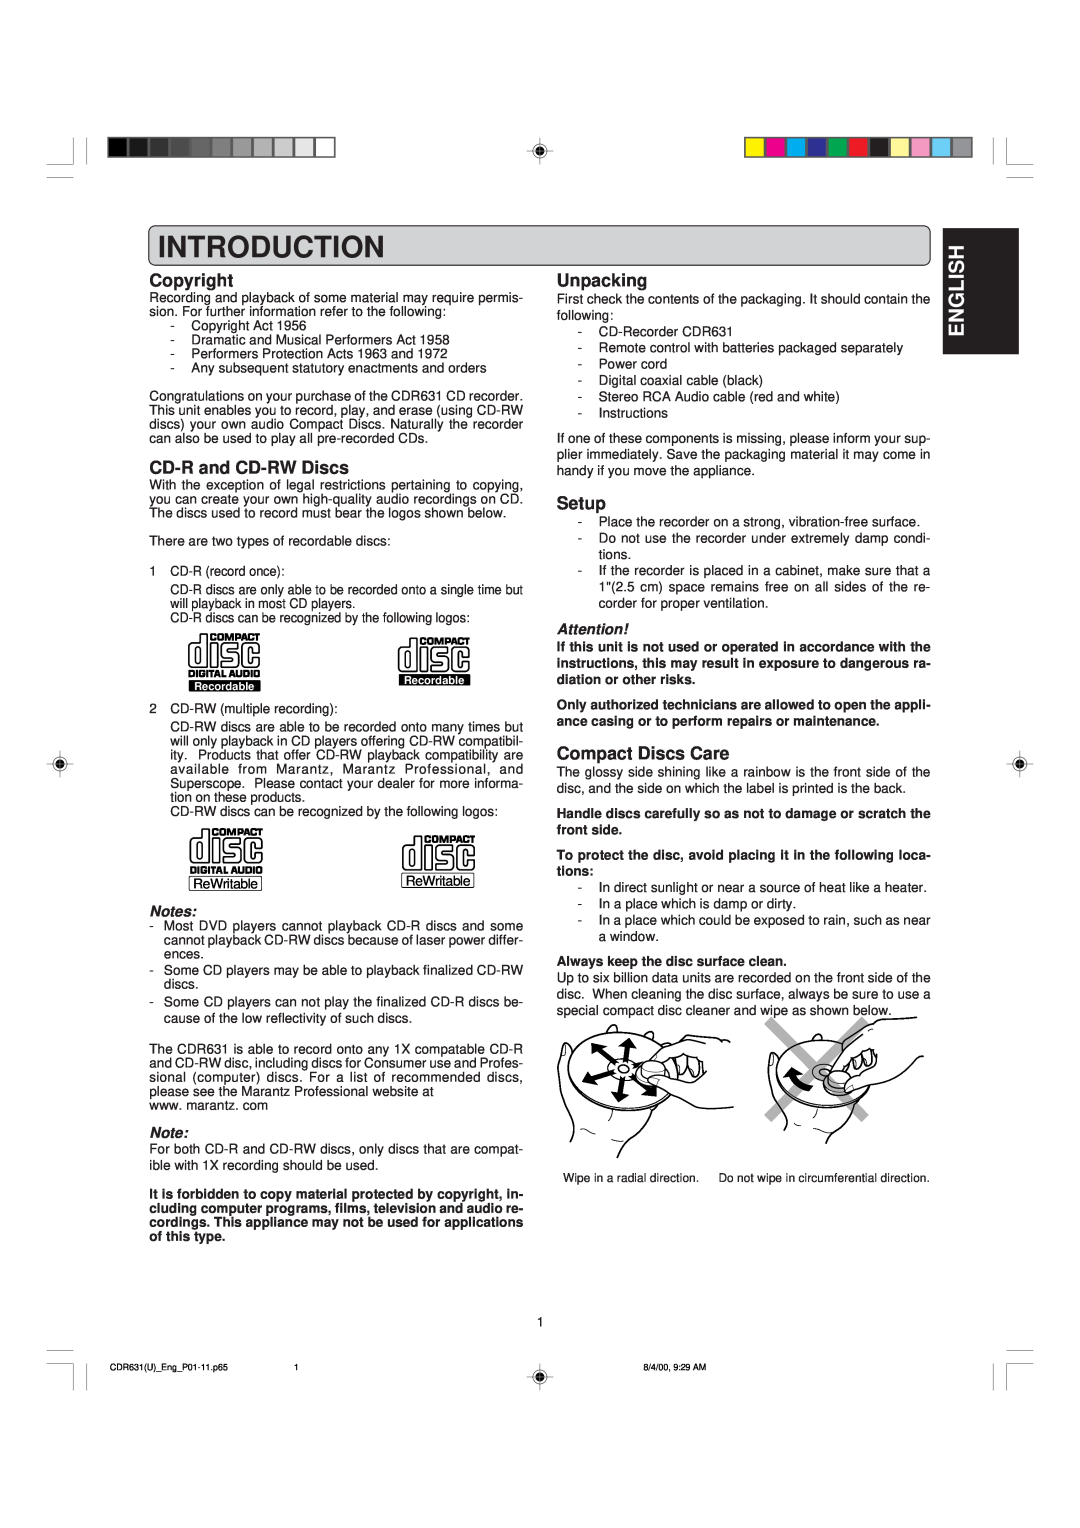 Marantz CDR631 manual Introduction, English, Copyright, CD-Rand CD-RWDiscs, Unpacking, Setup, Compact Discs Care 